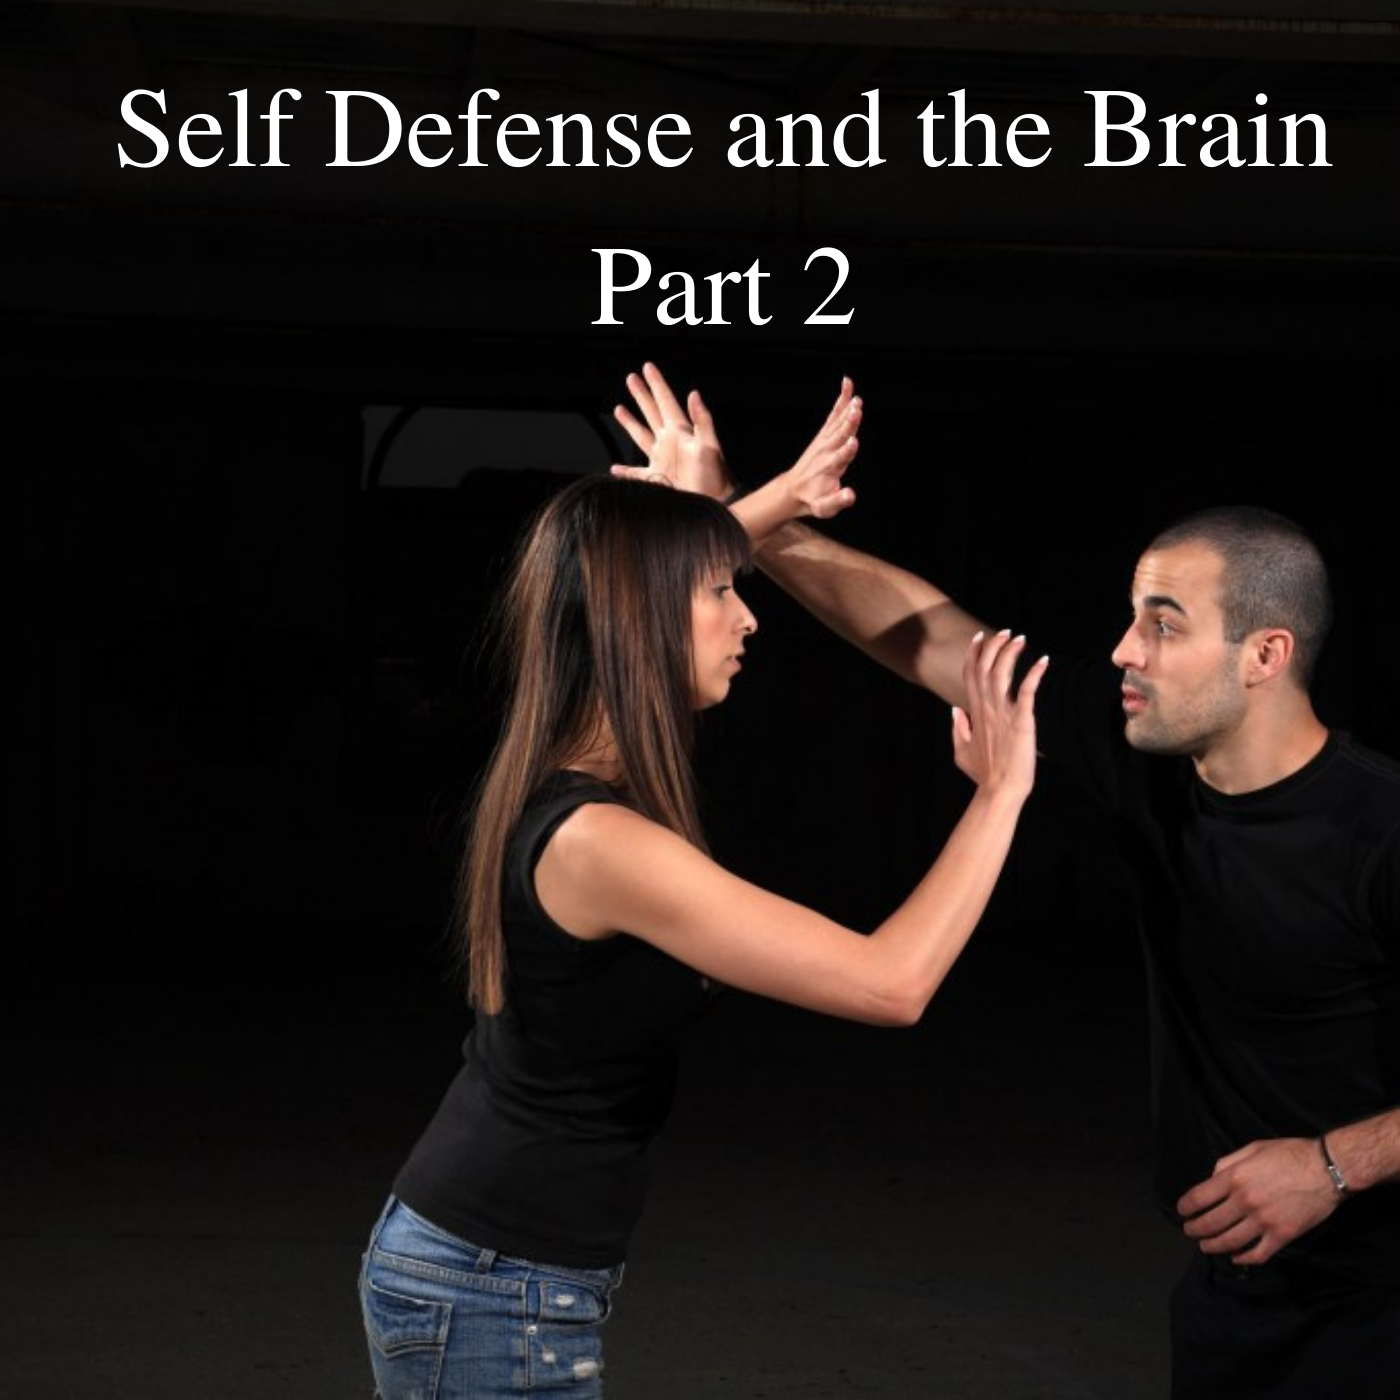 * Self Defense and the Brain